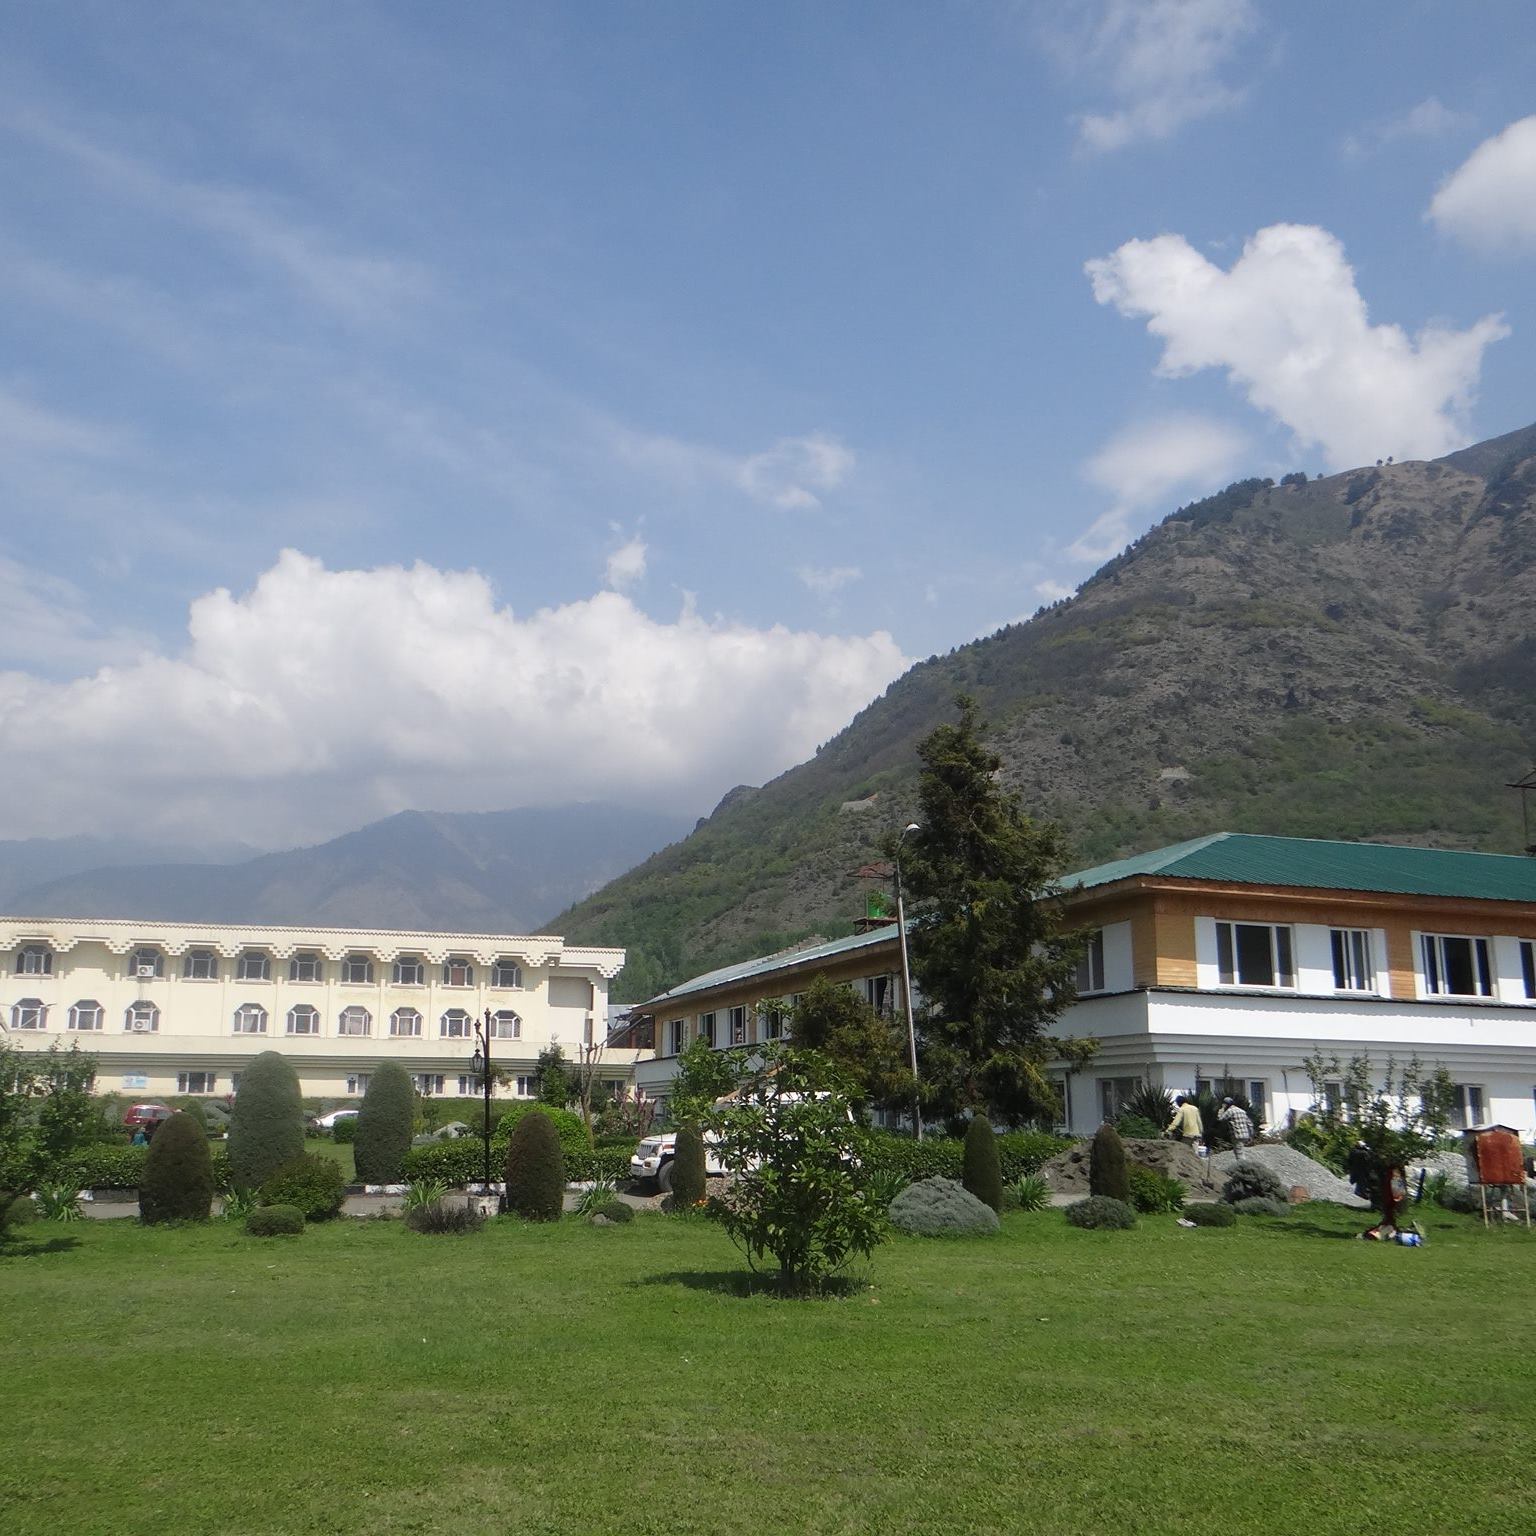 SKUAST Jammu granted accreditation as grade-A university by ICAR